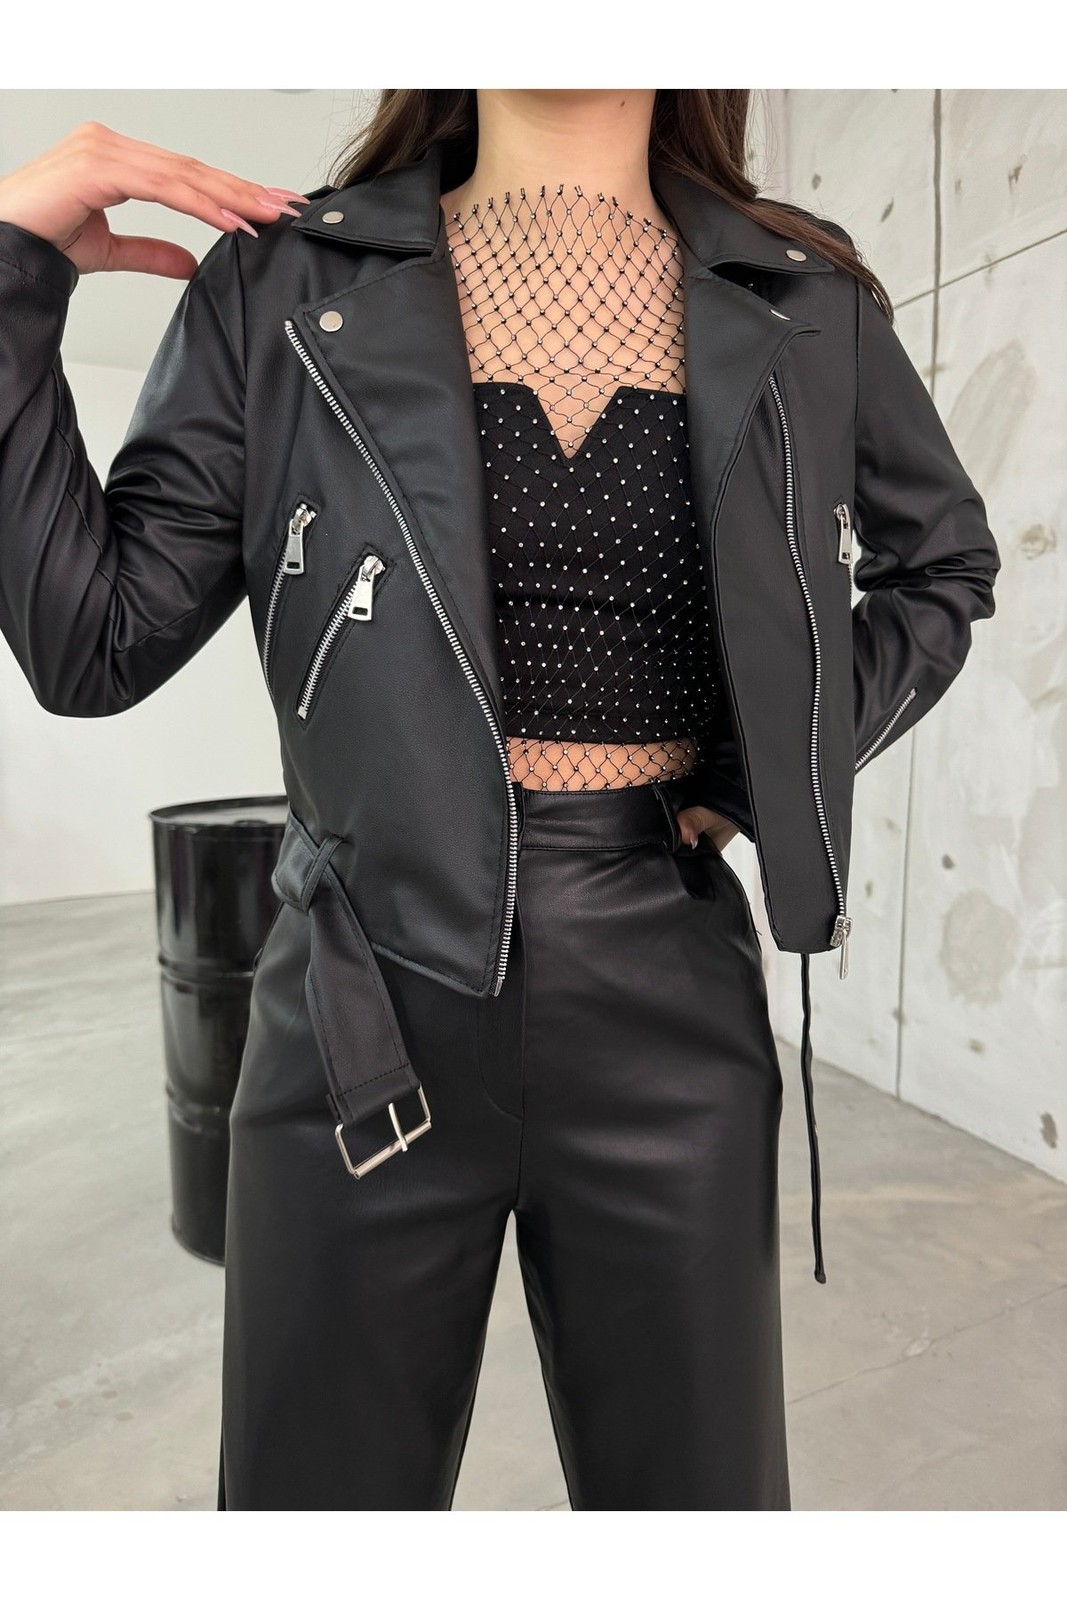 BİKELİFE Women's Black Belted Leather Jacket